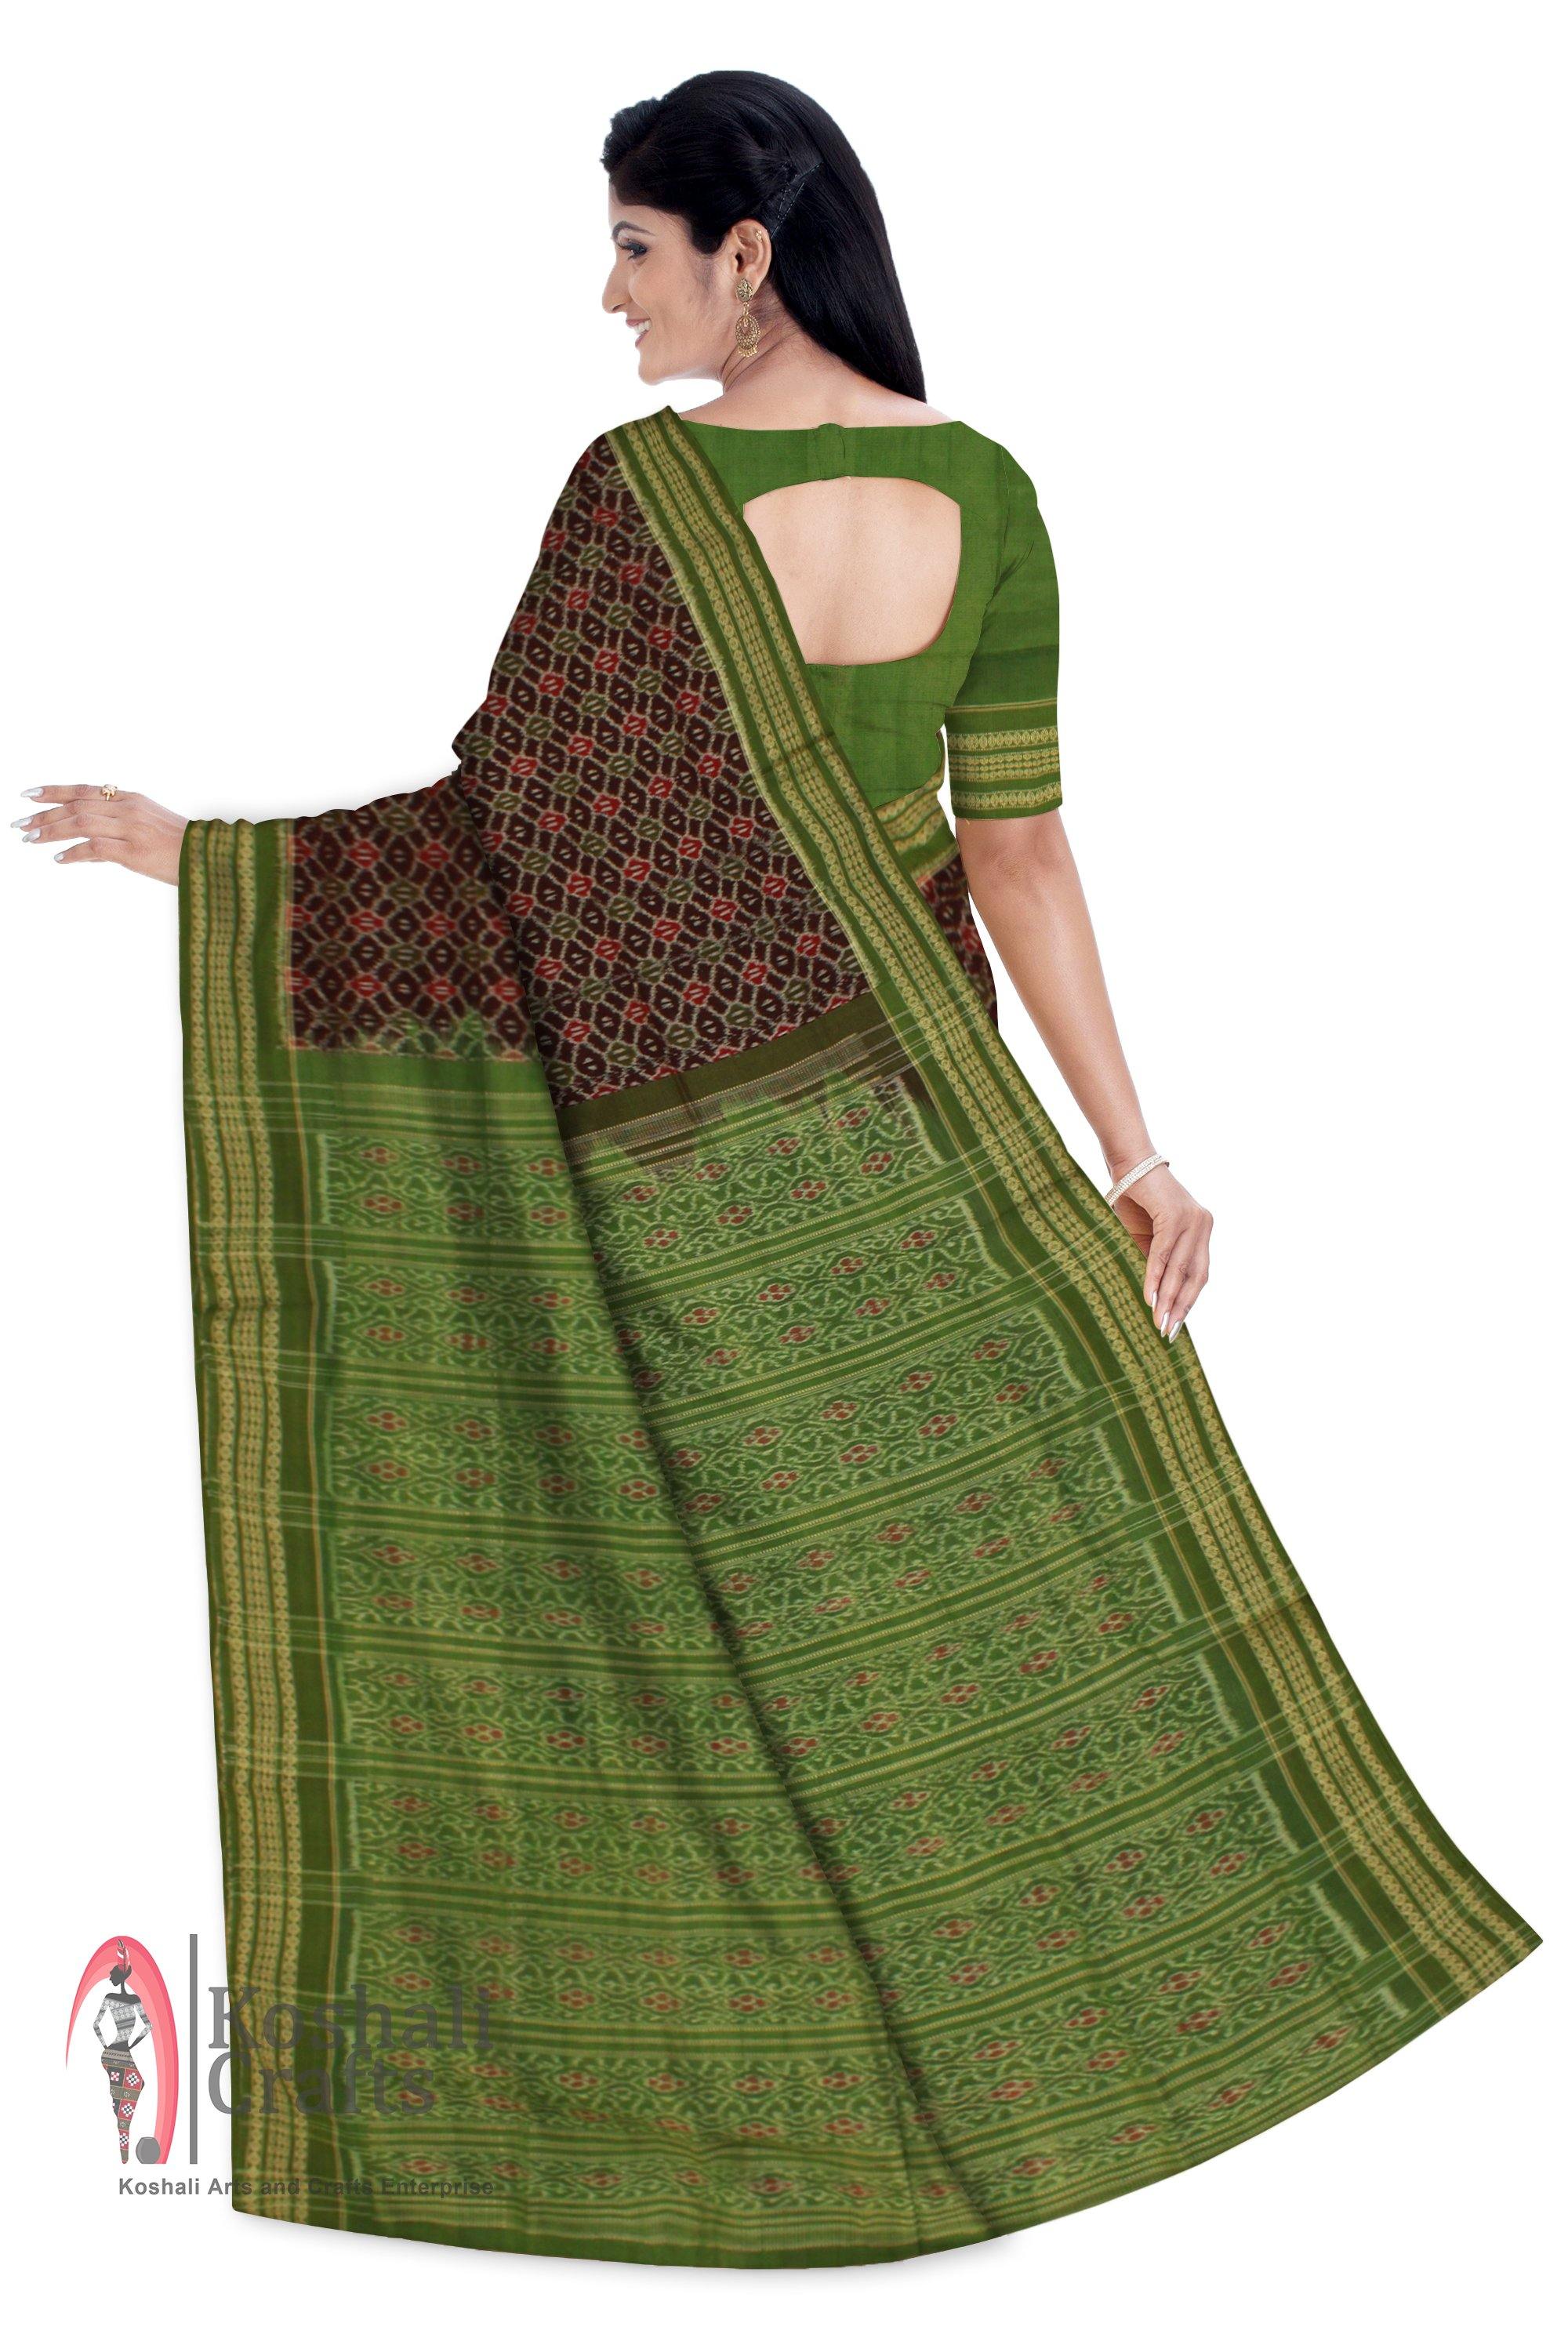 Exclusive Sambalpuri Rudrakhya print Barpali saree with Flower printed Pallu in Green Color - Koshali Arts & Crafts Enterprise